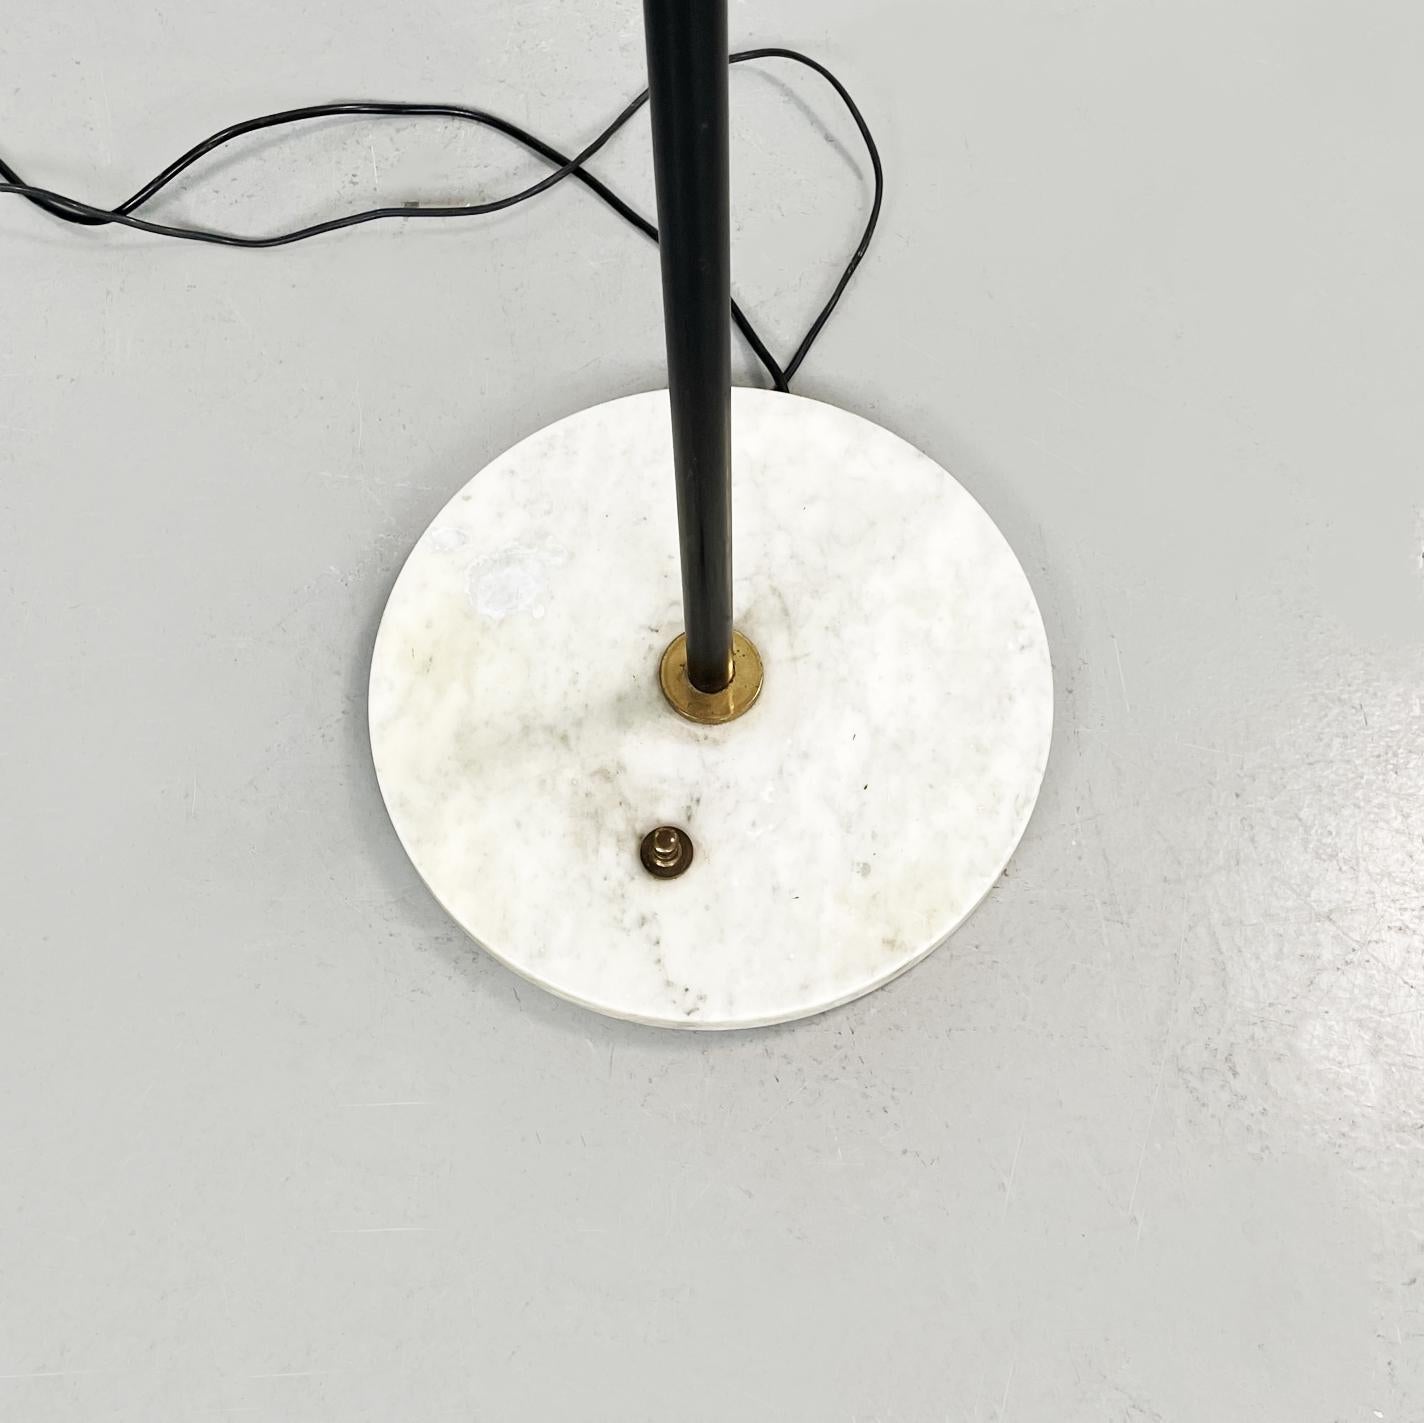 Italian Mid-Century Modern Adjustable Brass Metal Floor Lamp by Stilux, 1950s For Sale 8